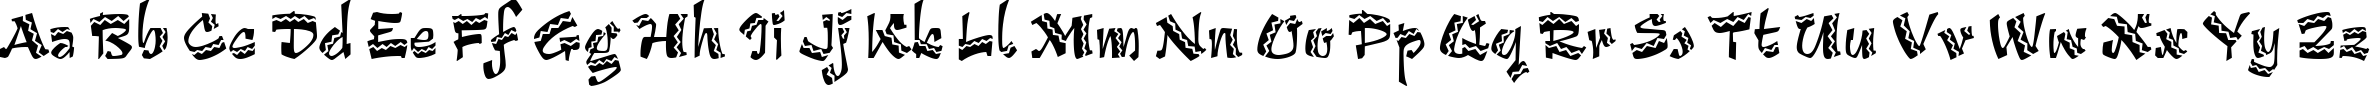 Пример написания английского алфавита шрифтом Arriba Arriba LET Plain:1.0